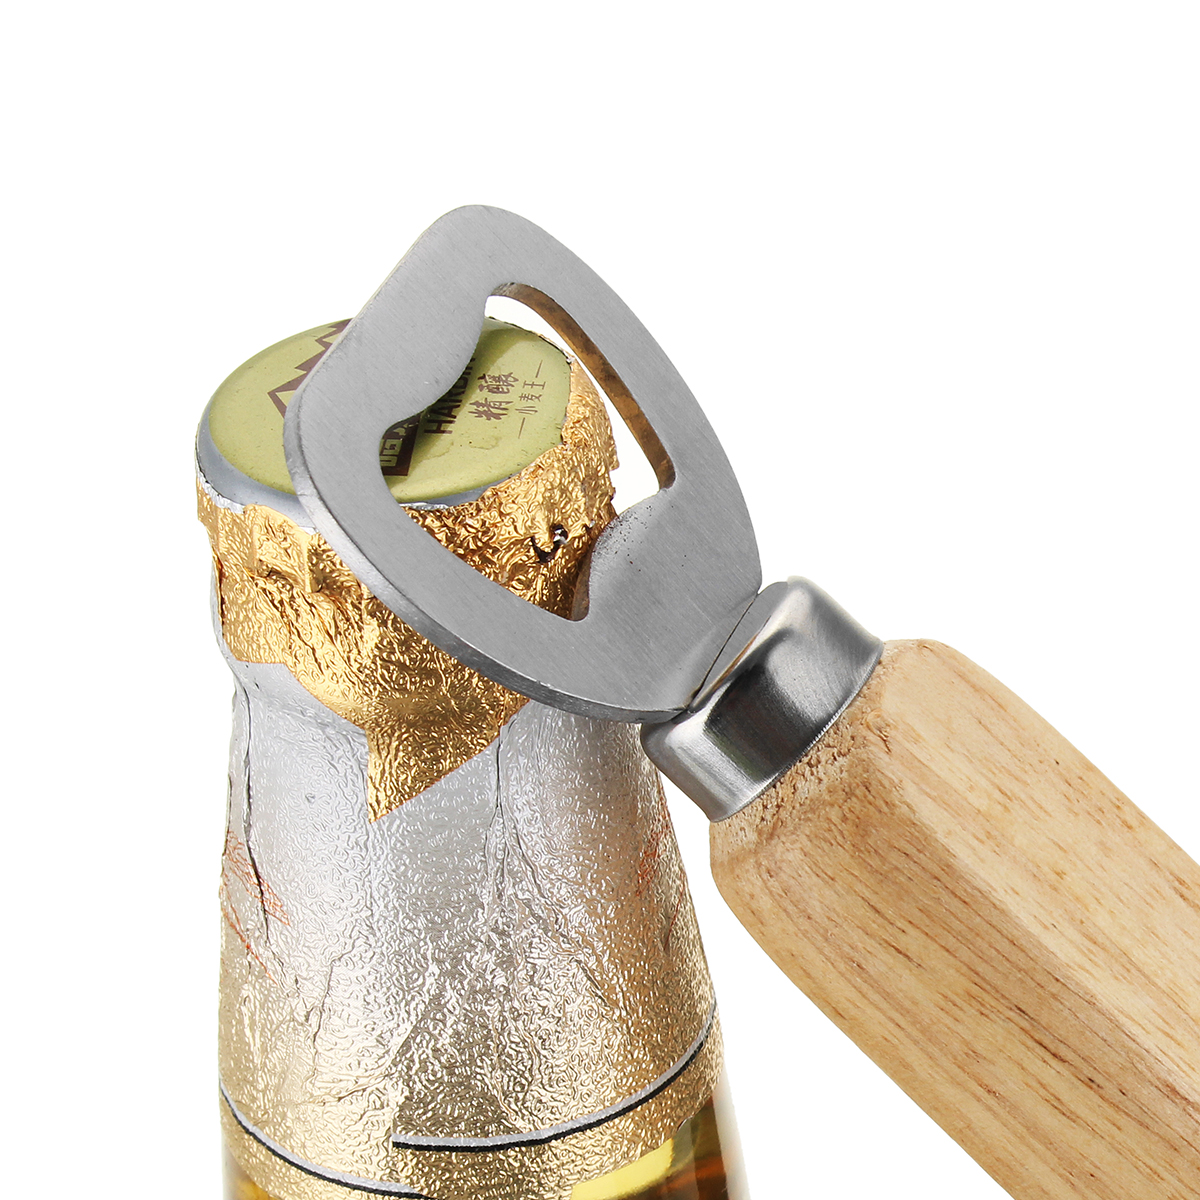 Wooden-Handle-Bottle-Opener-Soft-Handle-Smooth-Beer-Opening-Tool-1226331-7